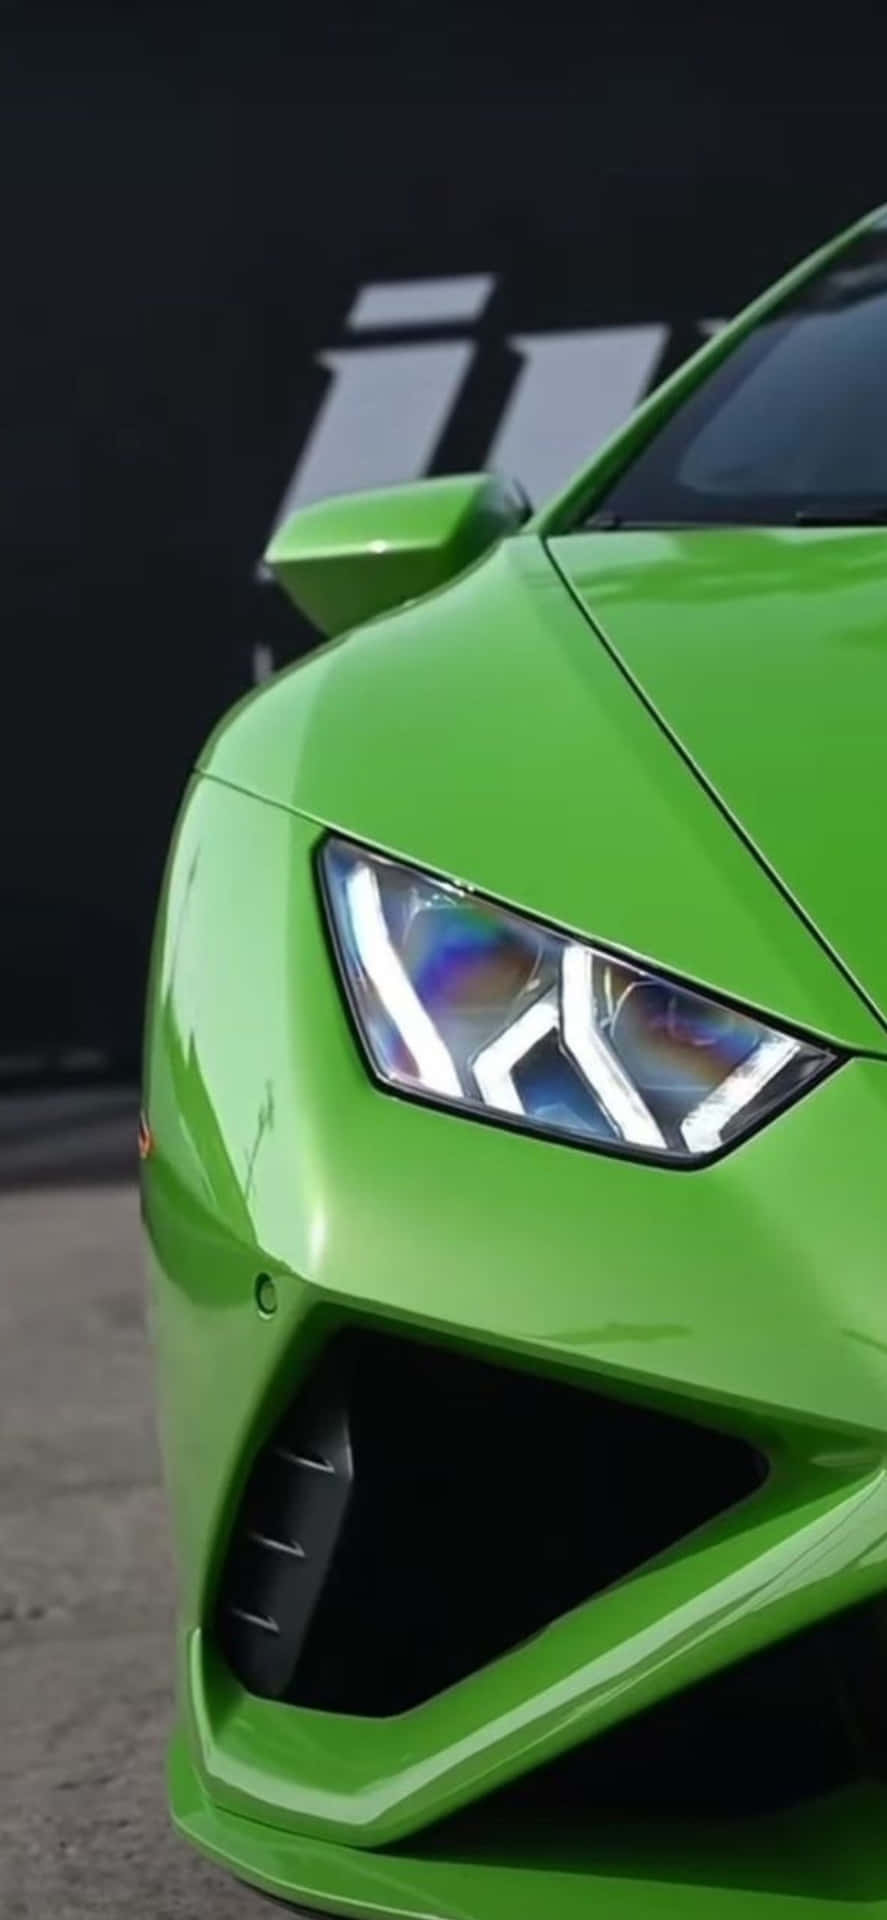 Iphonexs Max Lamborghini Grön Bakgrund.